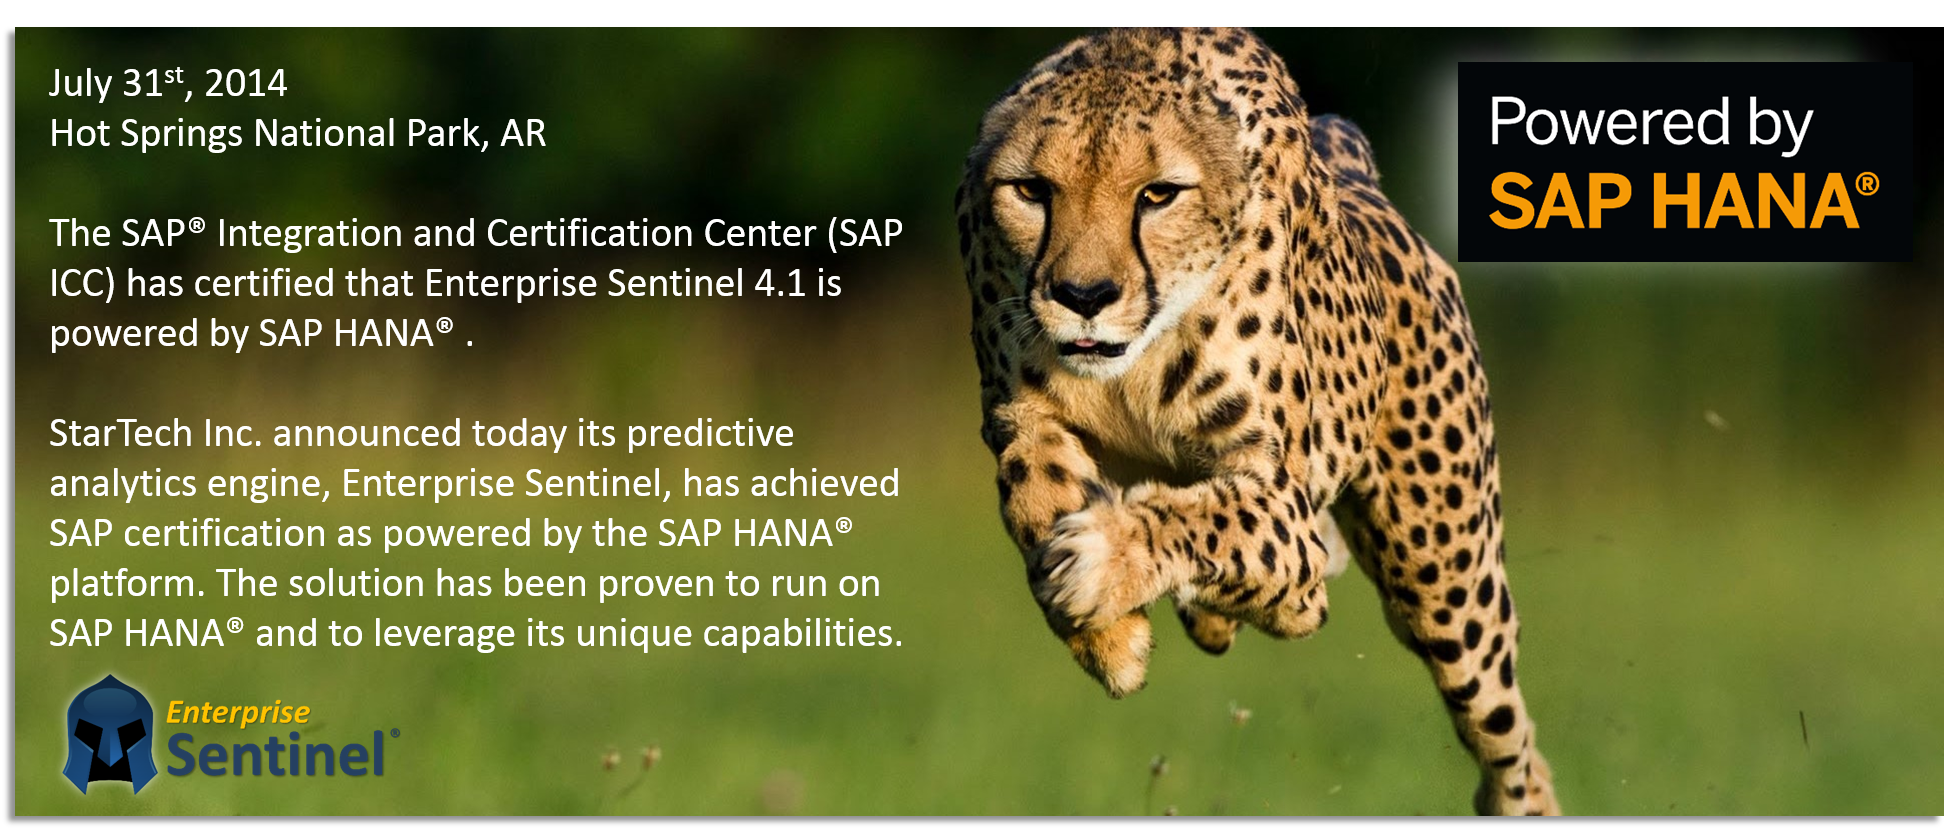 Enterprise Sentinel - Powered by SAP HANA